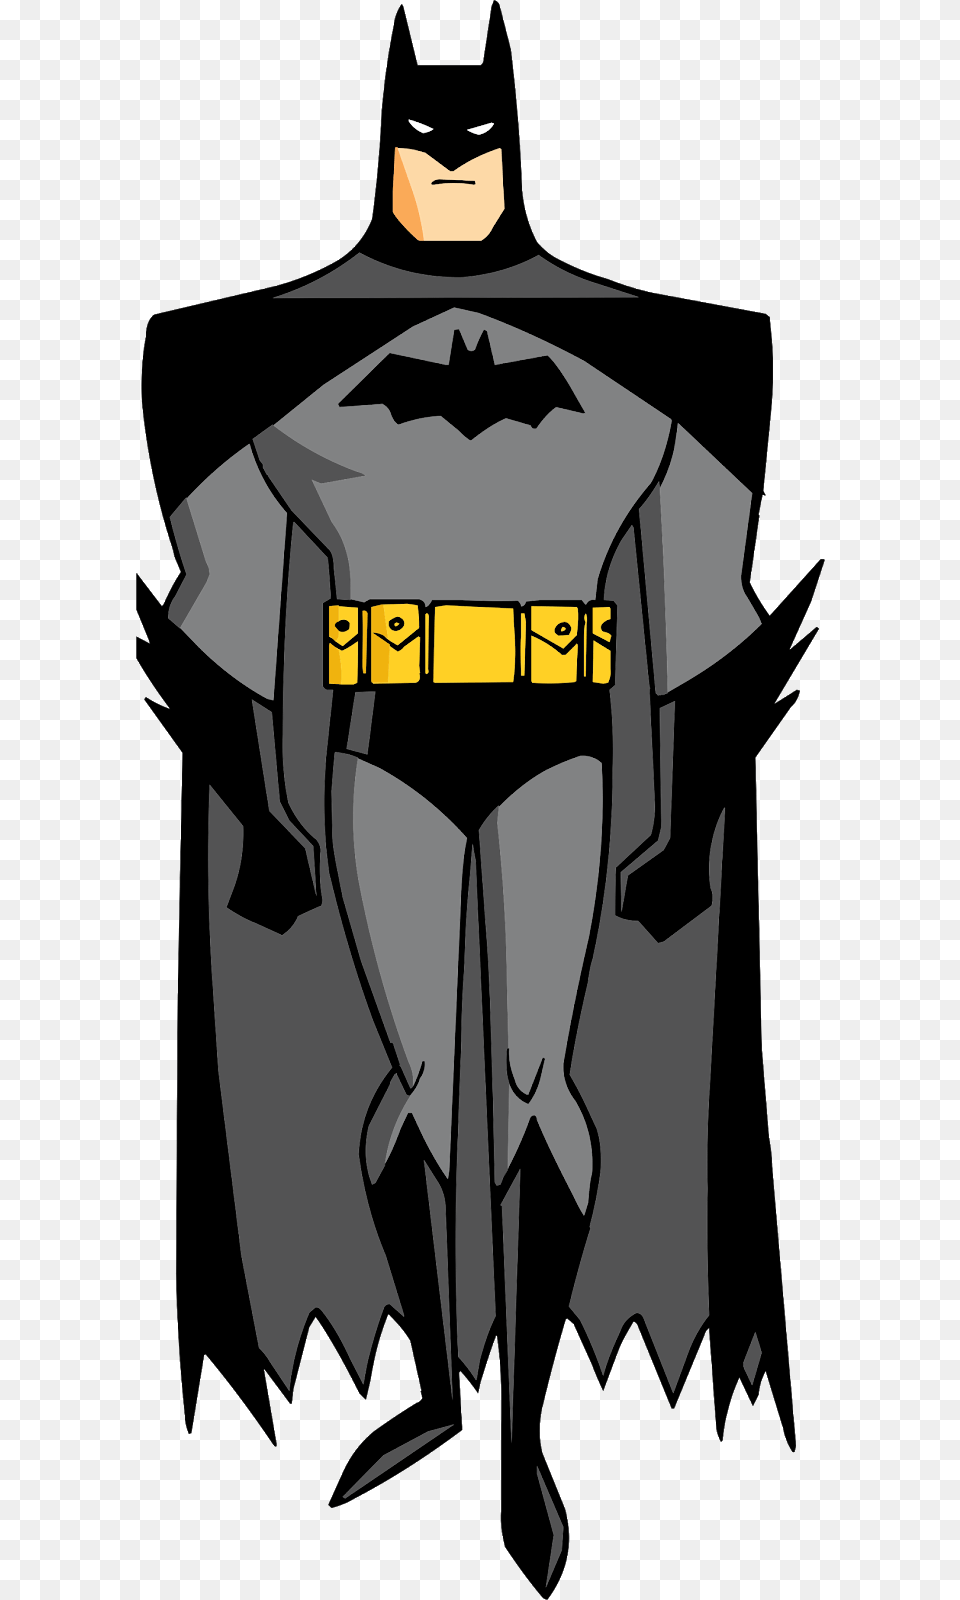 Batman Characters Batman Cartoon Characters Batman, Cape, Clothing, Logo, T-shirt Png Image